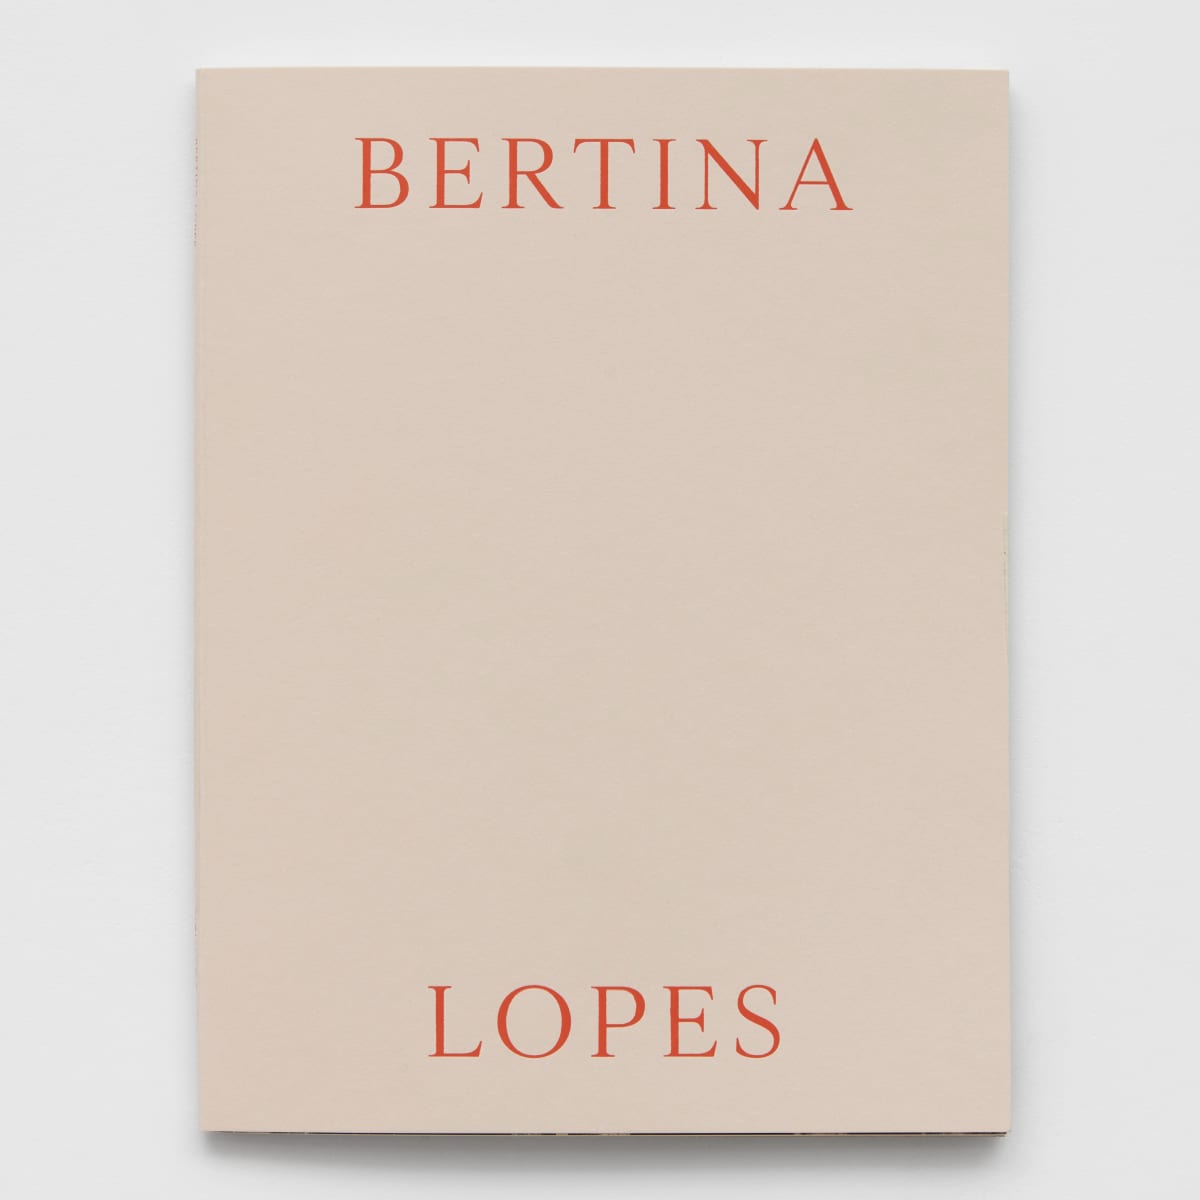 Bertina LOPES